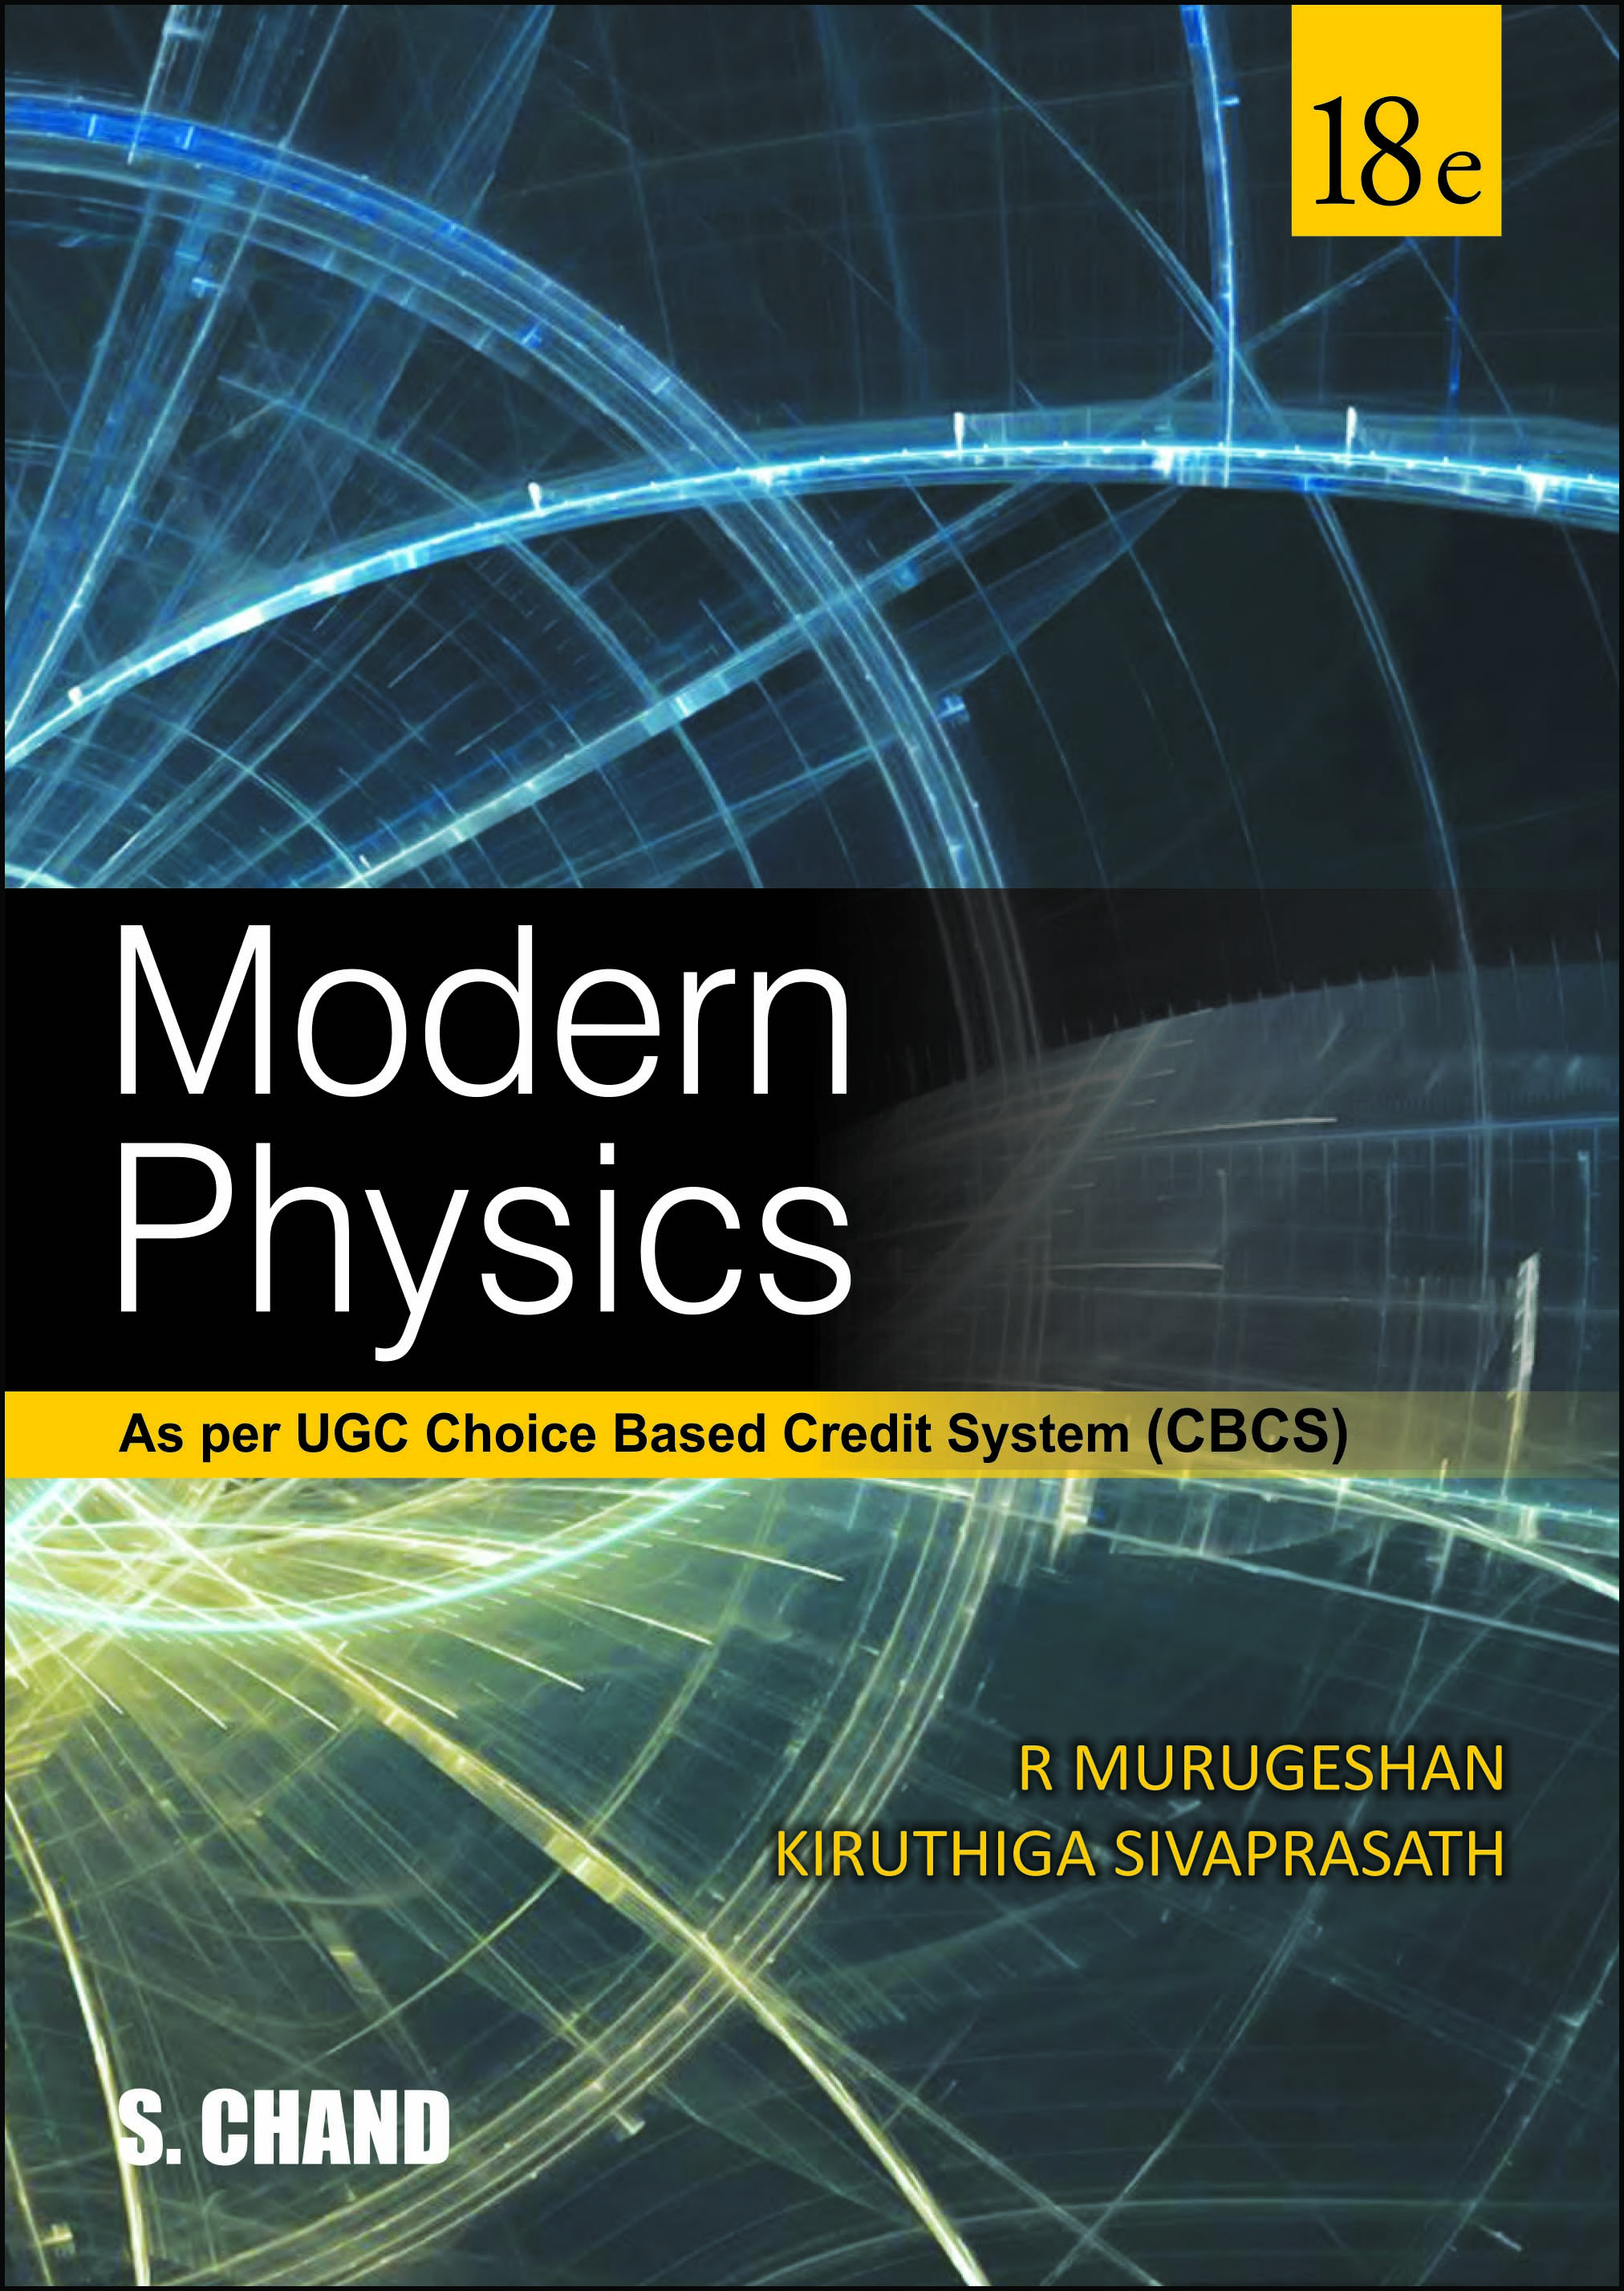 modern physics online